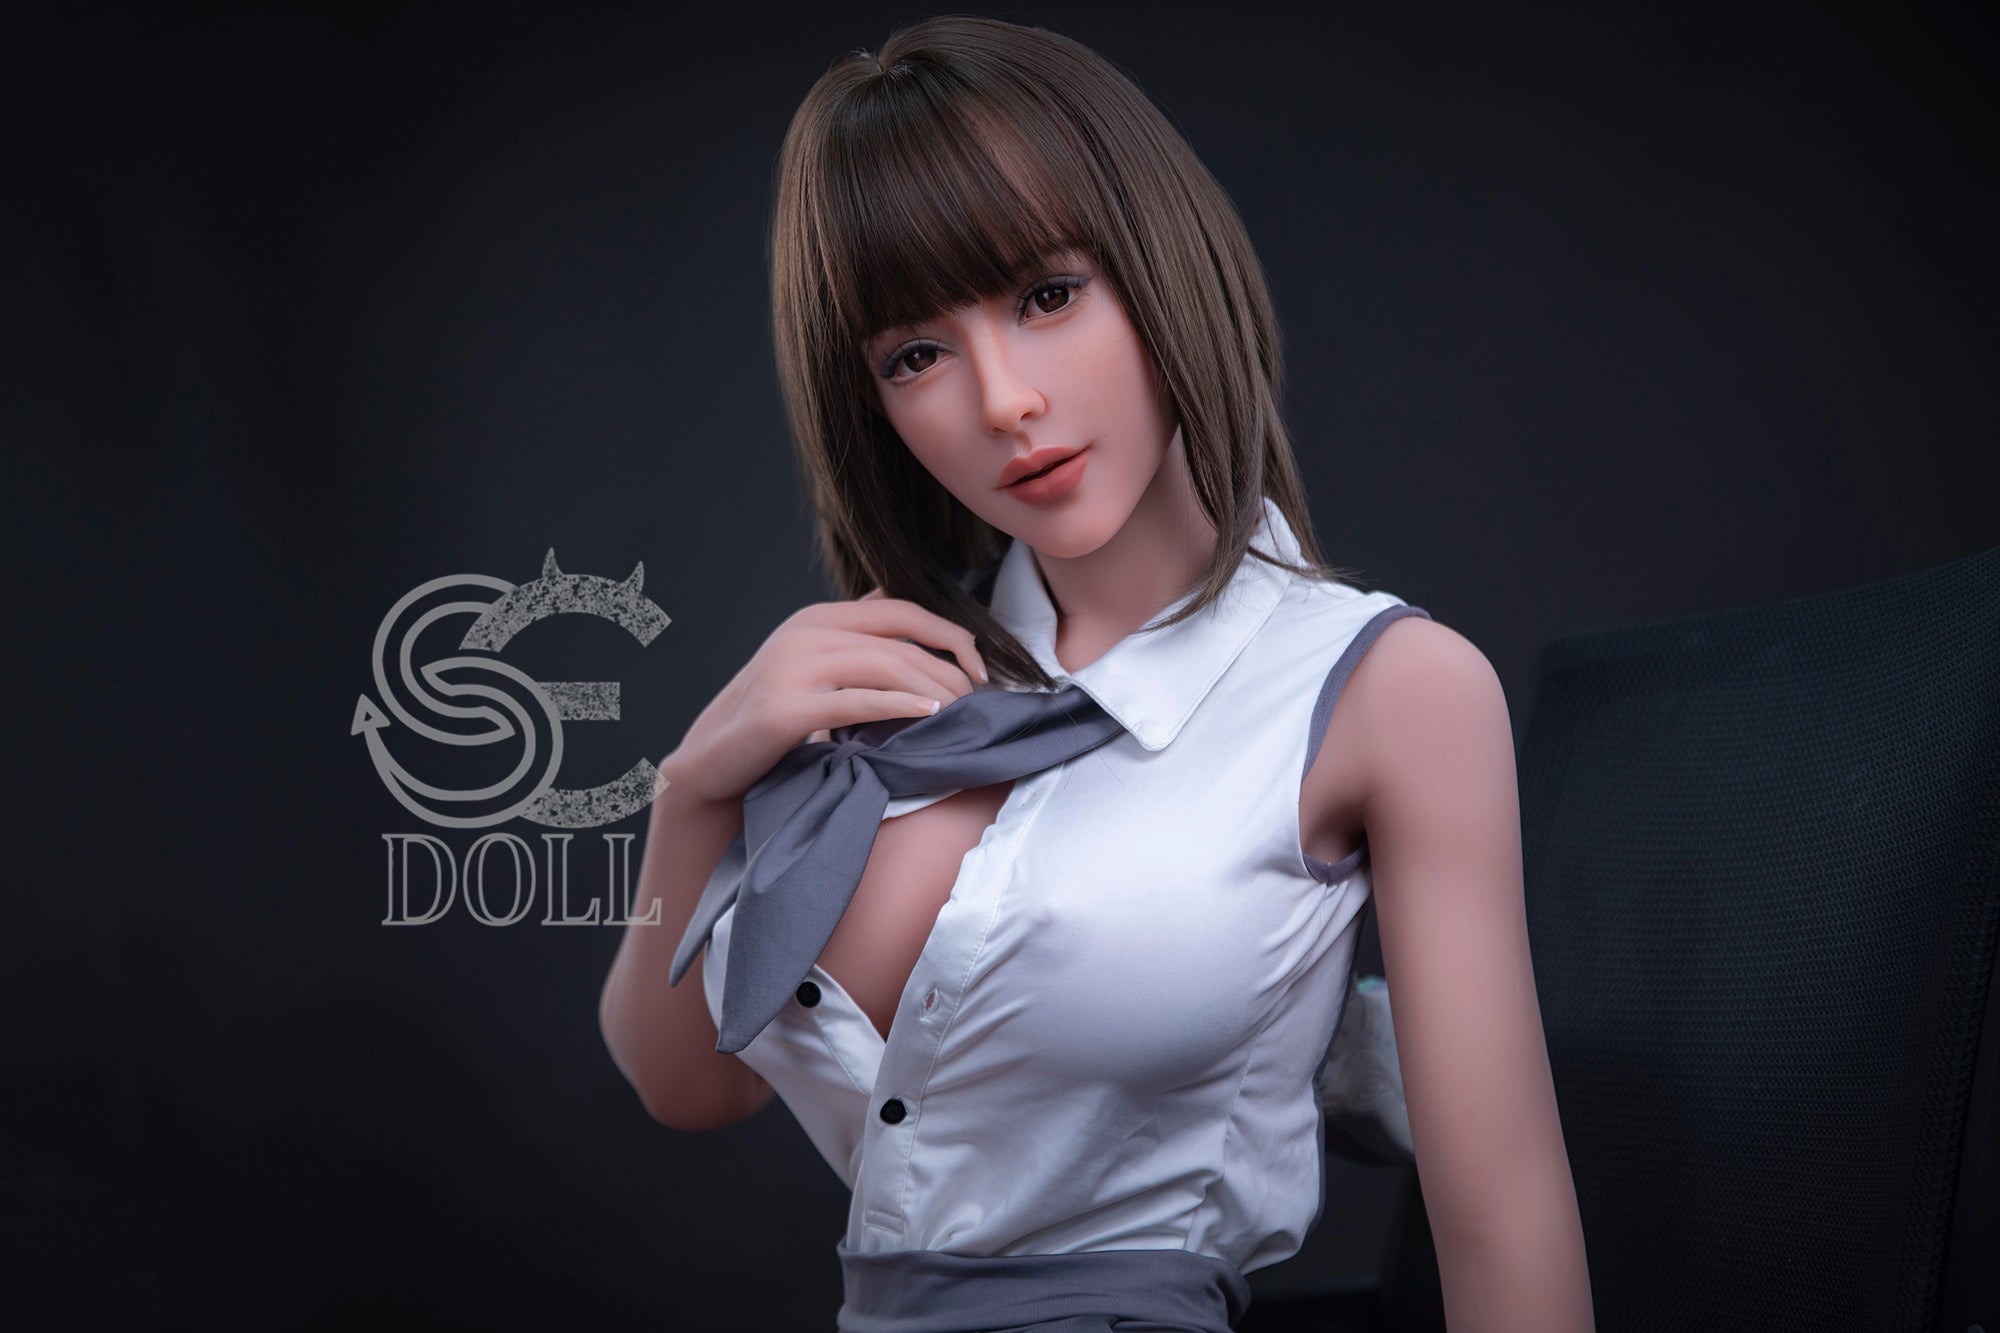 SEDOLL 161 cm F TPE - Nancy | Buy Sex Dolls at DOLLS ACTUALLY